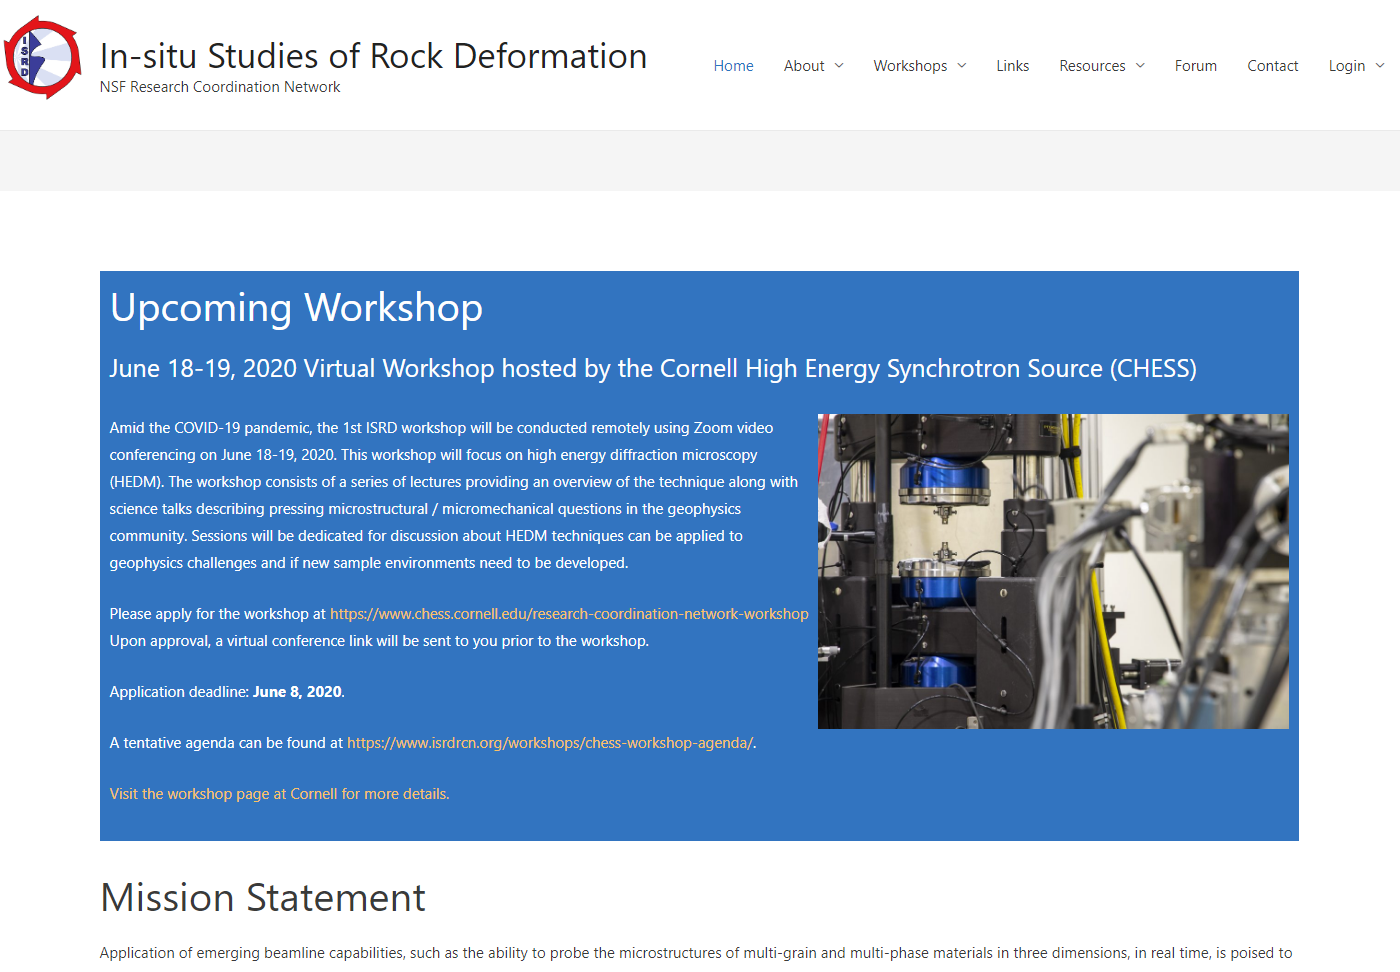 ISRD-RCN Webpage Screenshot